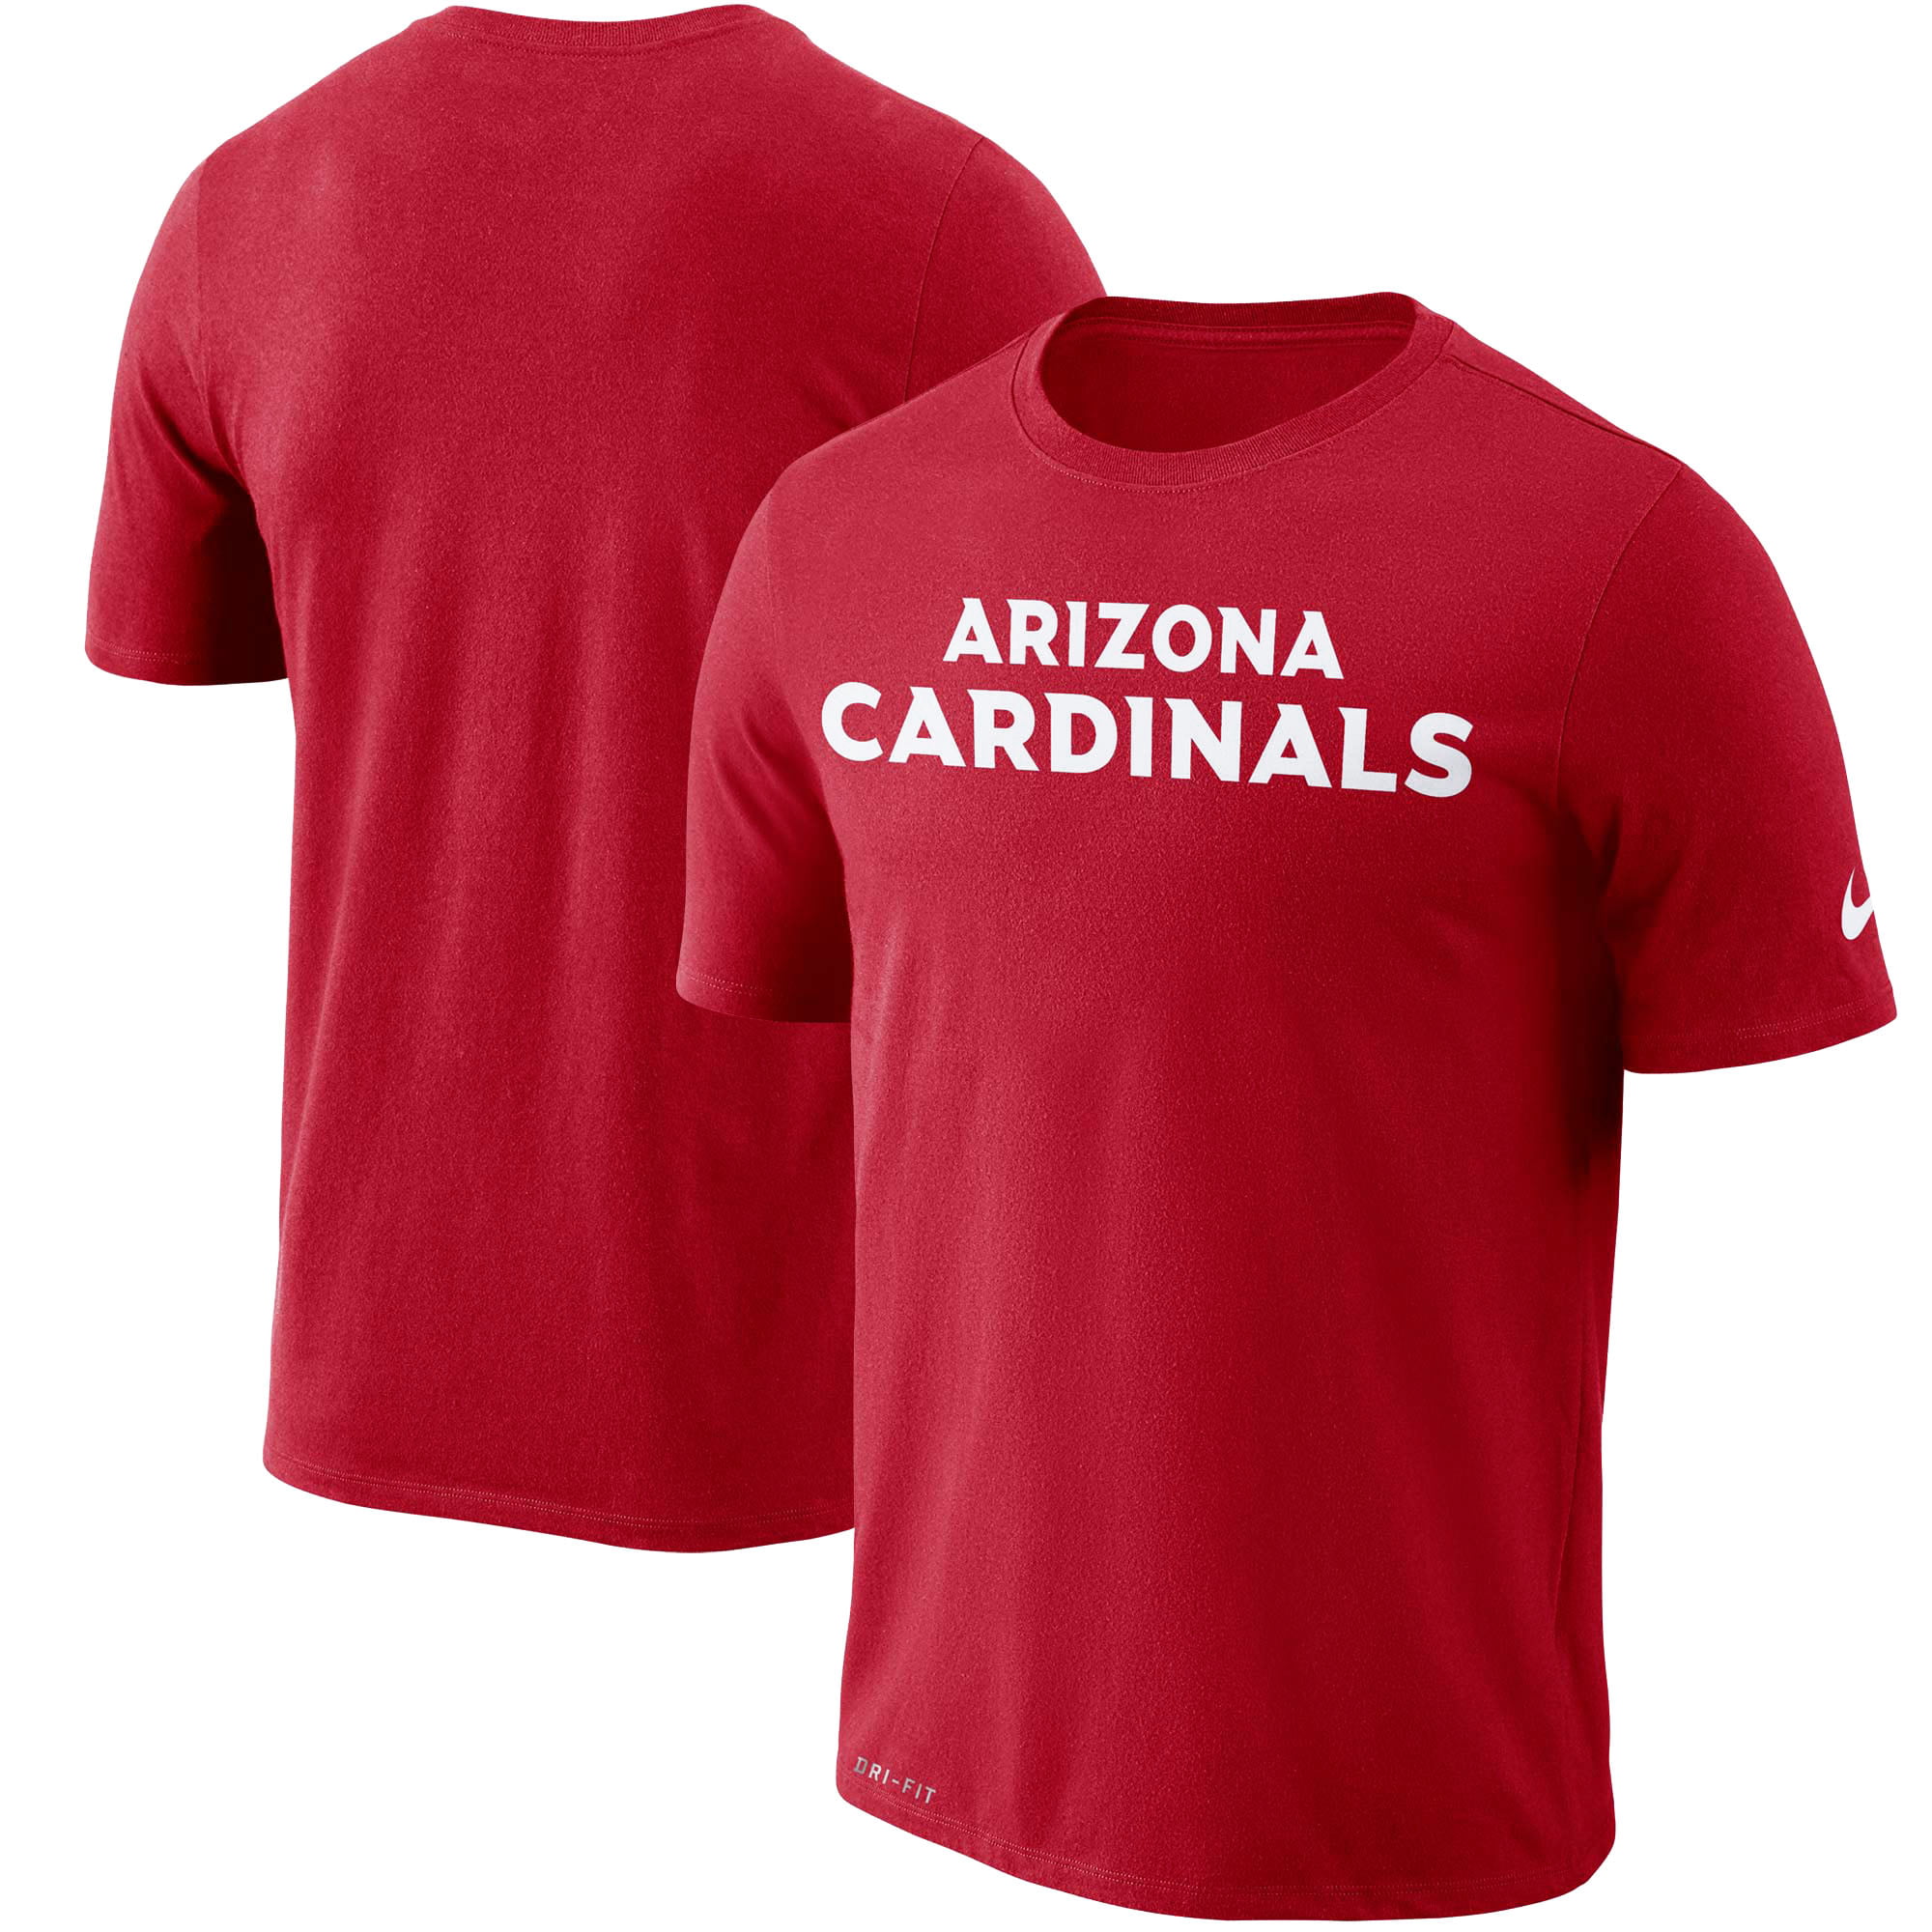 Arizona Cardinals Nike Dri-FIT Cotton 